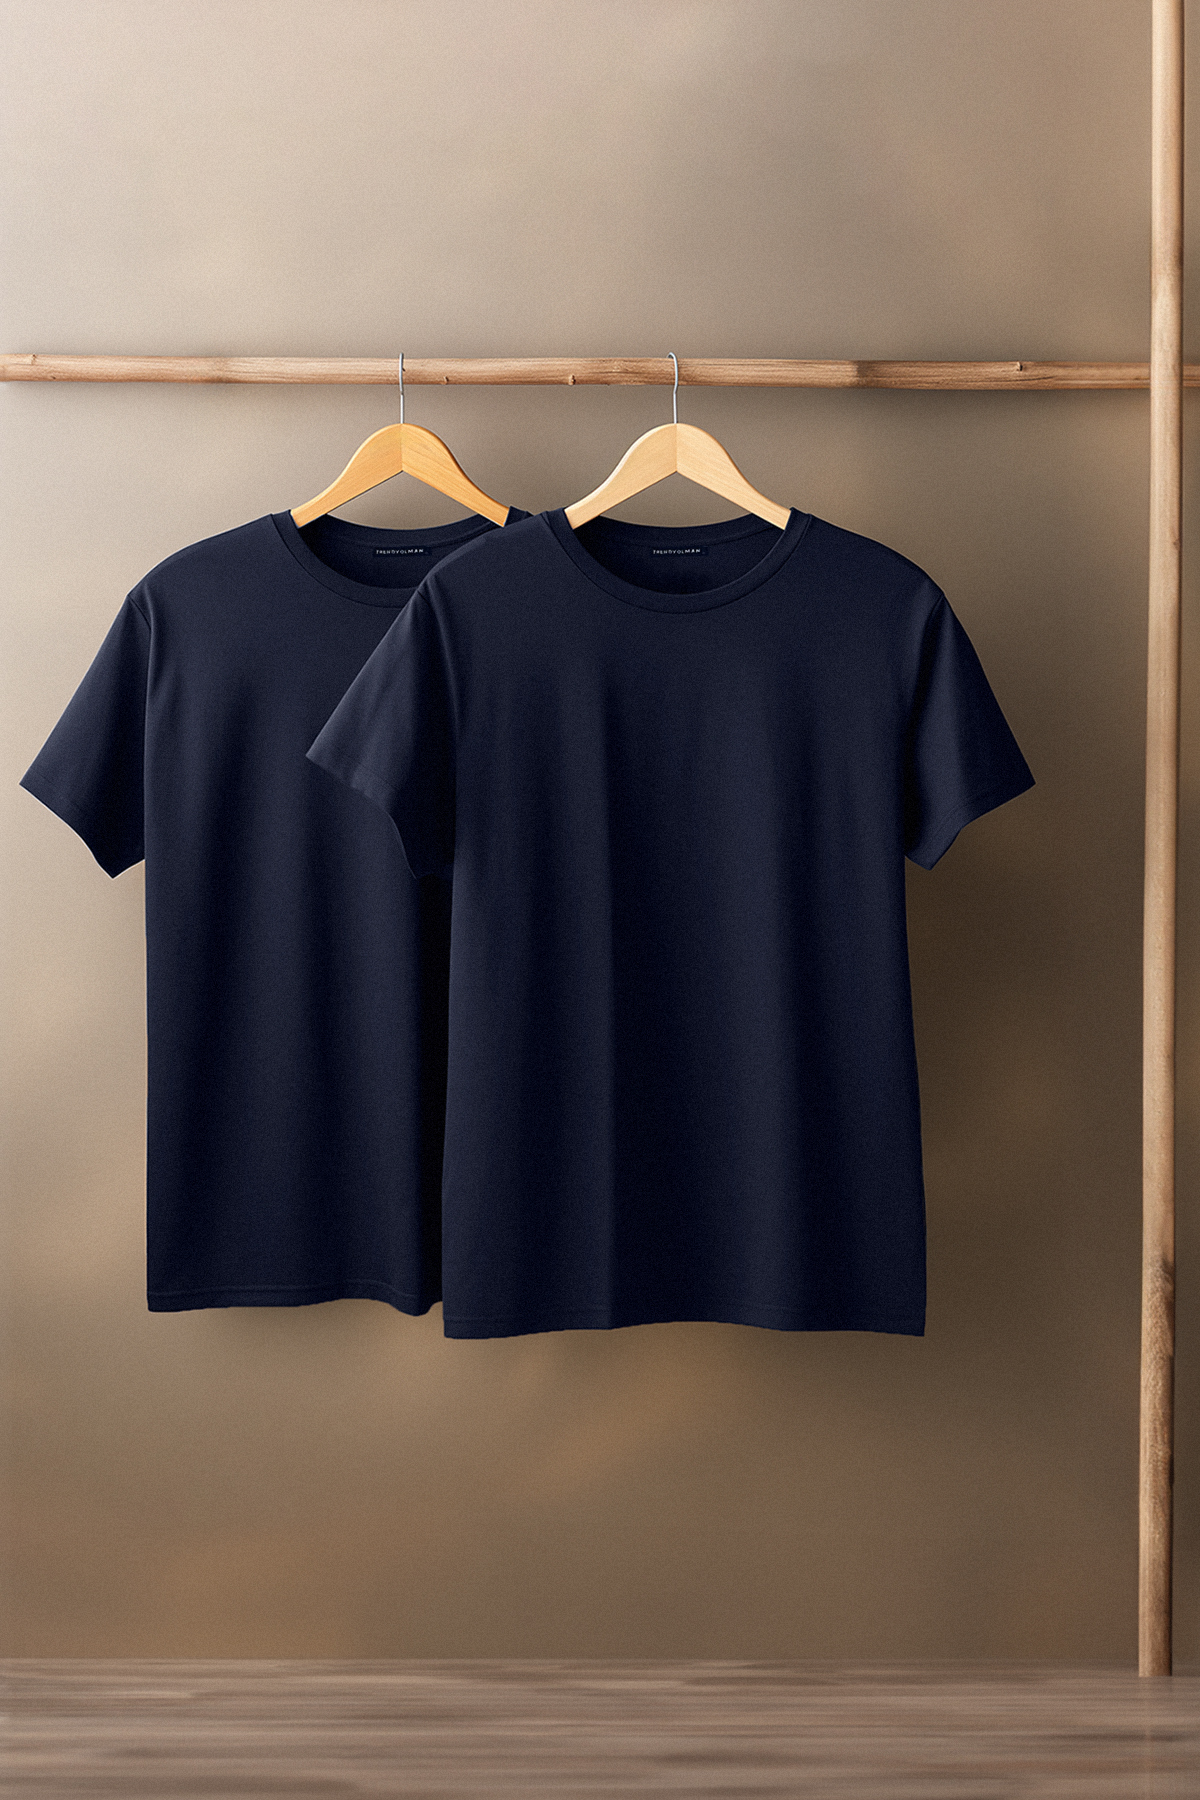 Trendyol Navy Blue Basic Slim Fit 100% Cotton 2-Pack Crew Neck Short Sleeve T-Shirt